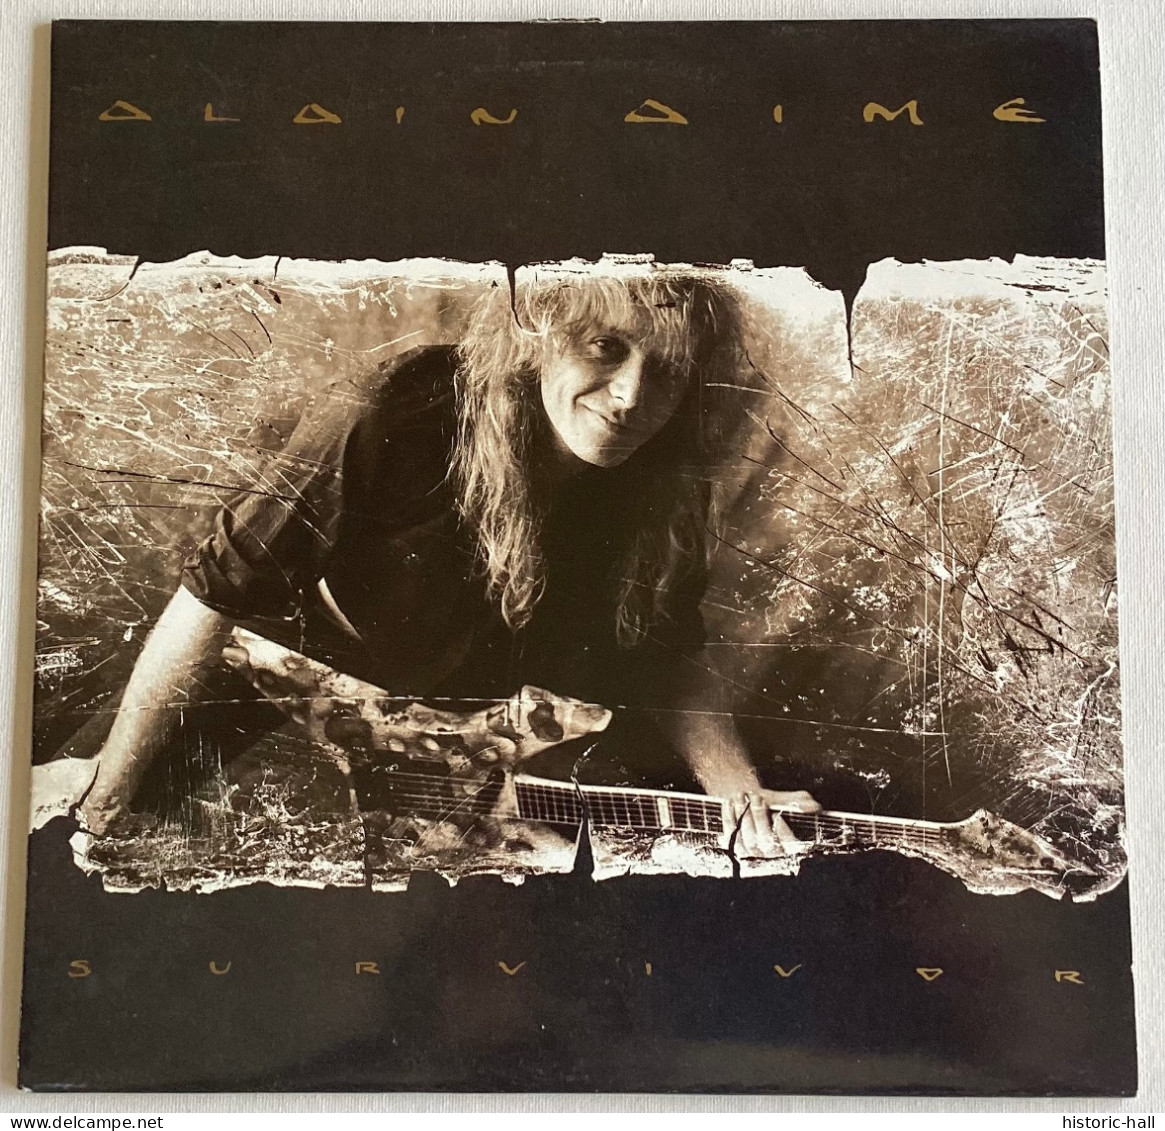 ALAIN AIME - Survivor - LP - 1989 -  French Press - Hard Rock & Metal